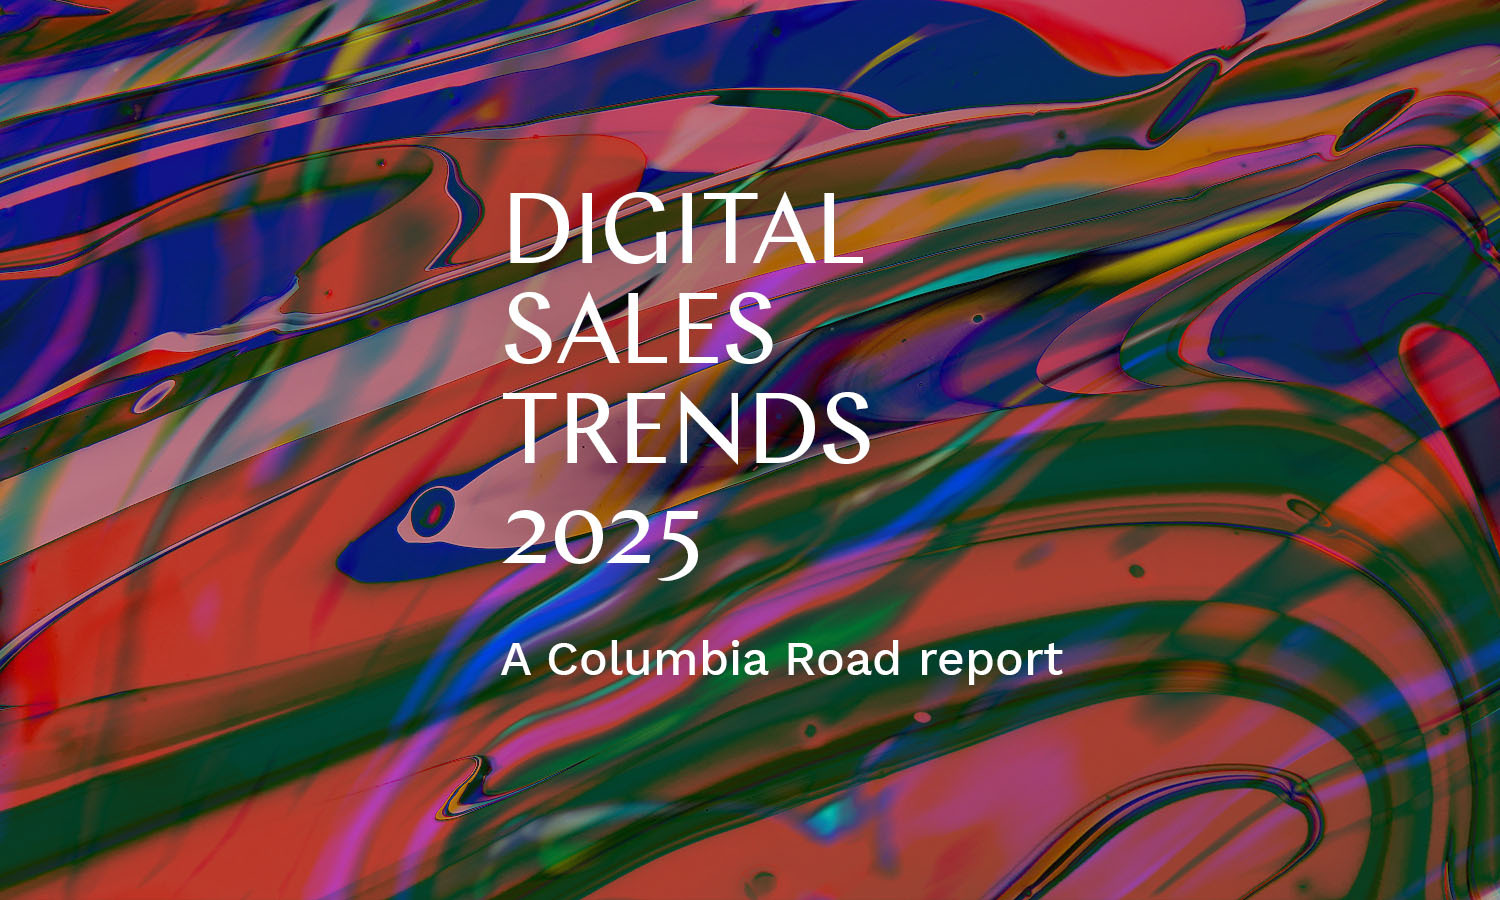 Digital-Sales-2025-trend-report-1-thumbnail